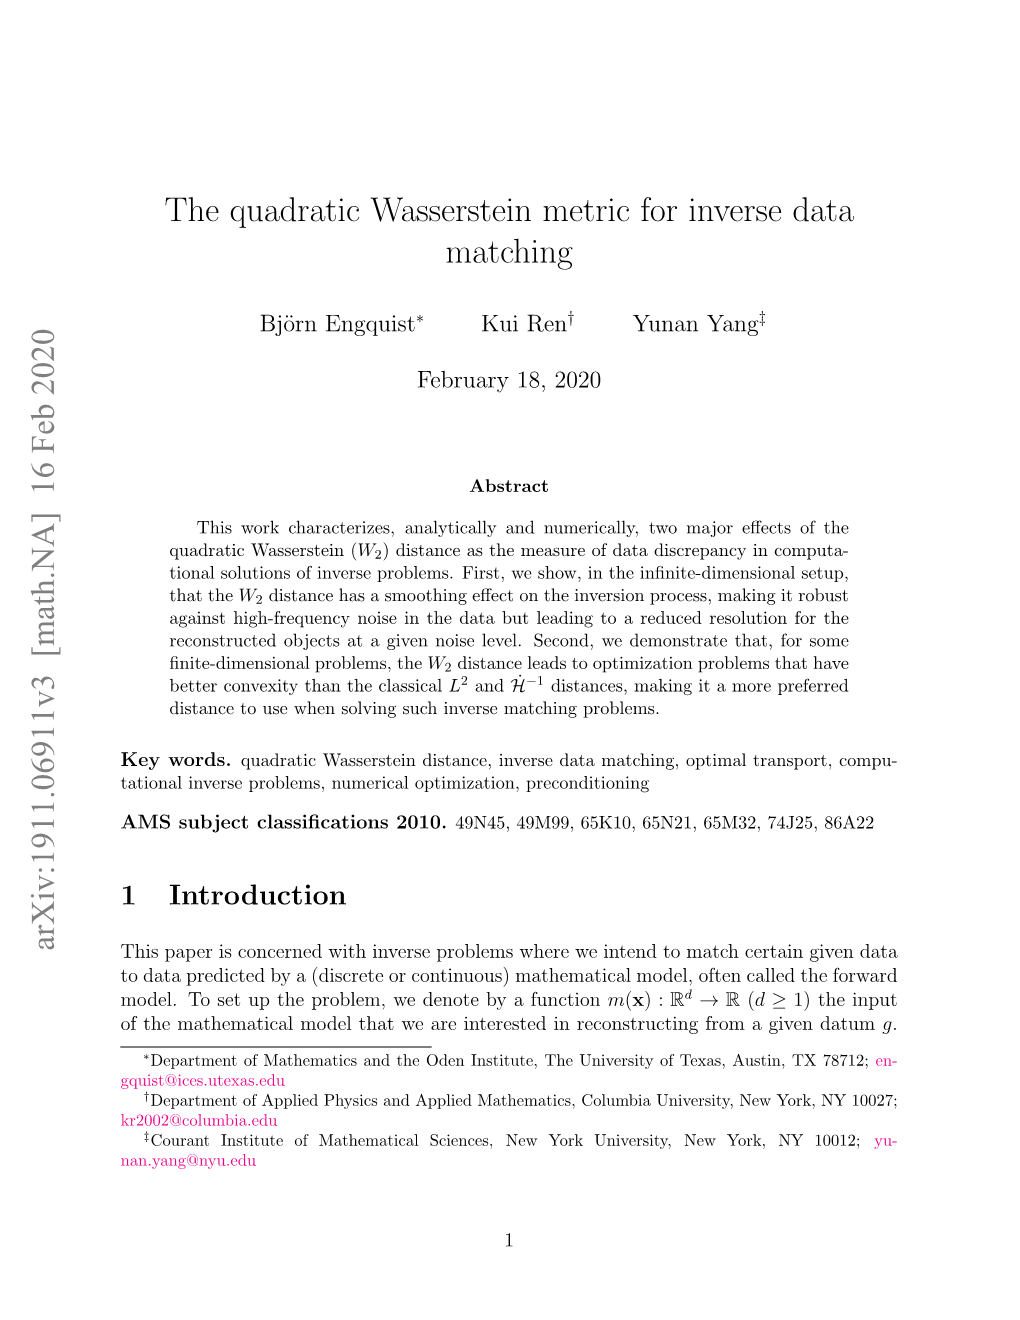 The Quadratic Wasserstein Metric for Inverse Data Matching